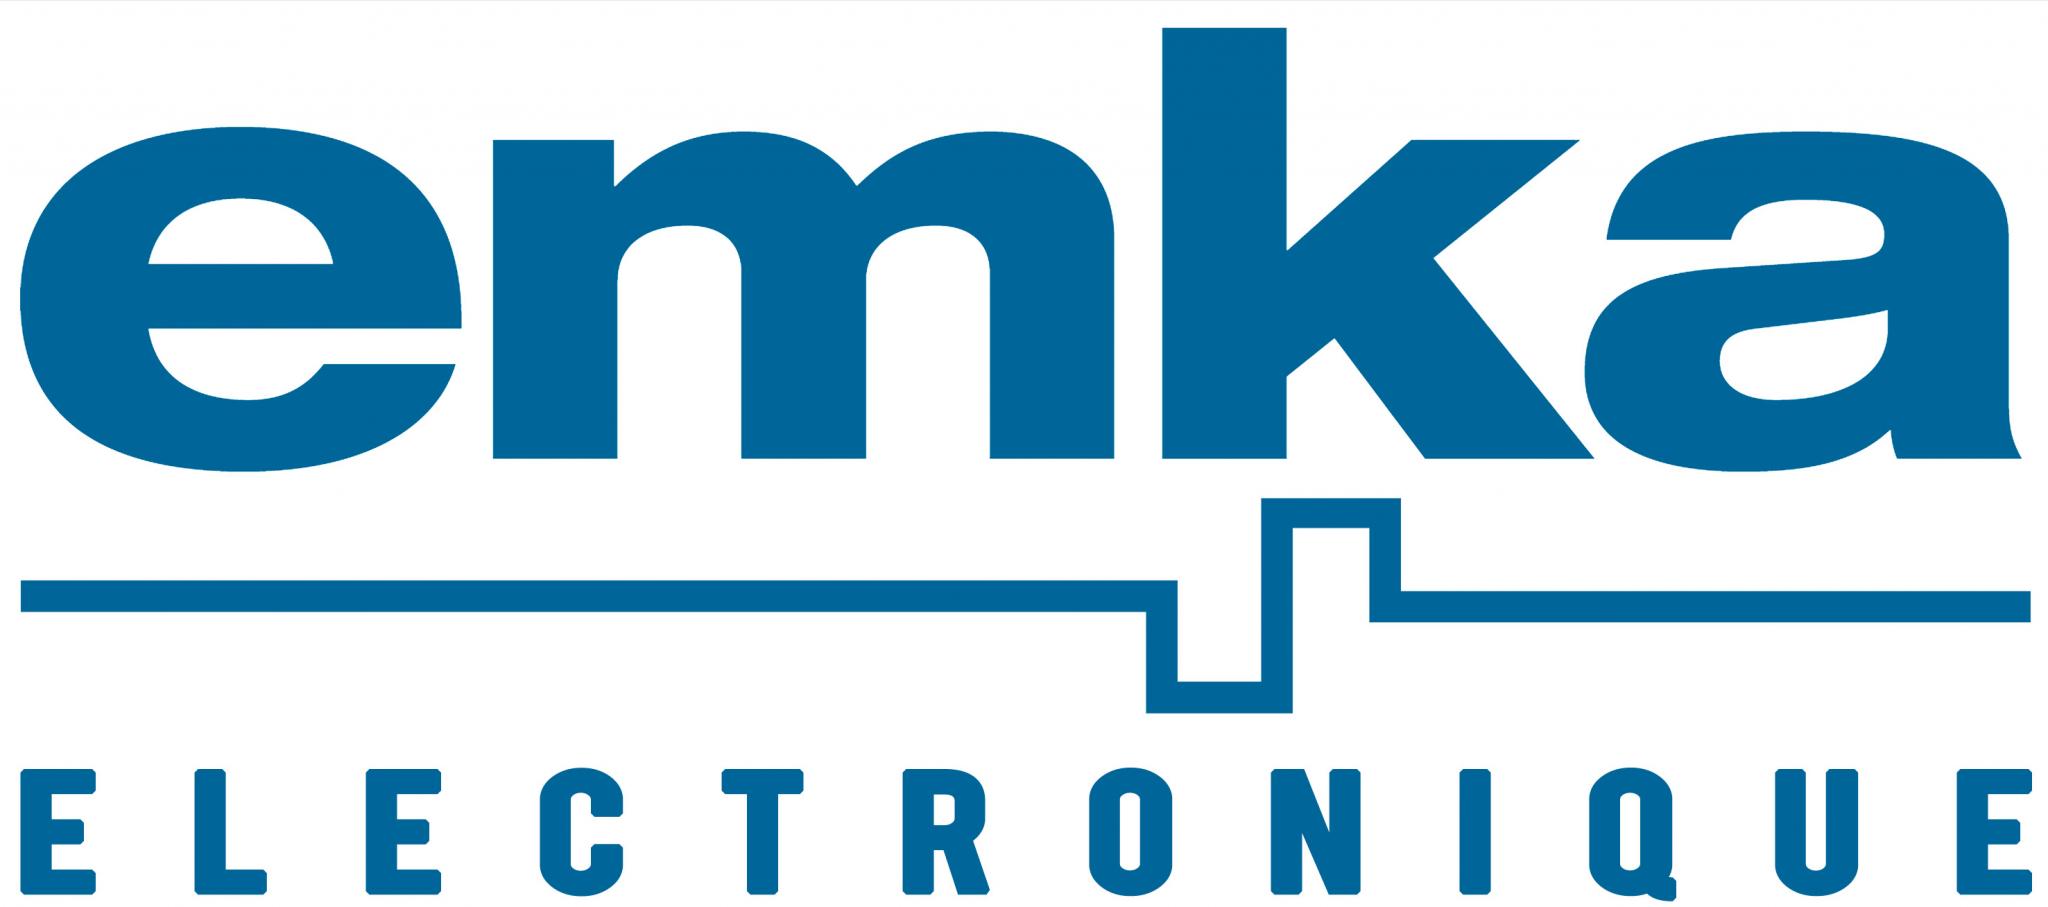 Logo+EMKA+Electronique+-+BLEU+fond+blanc+300dpi+Large